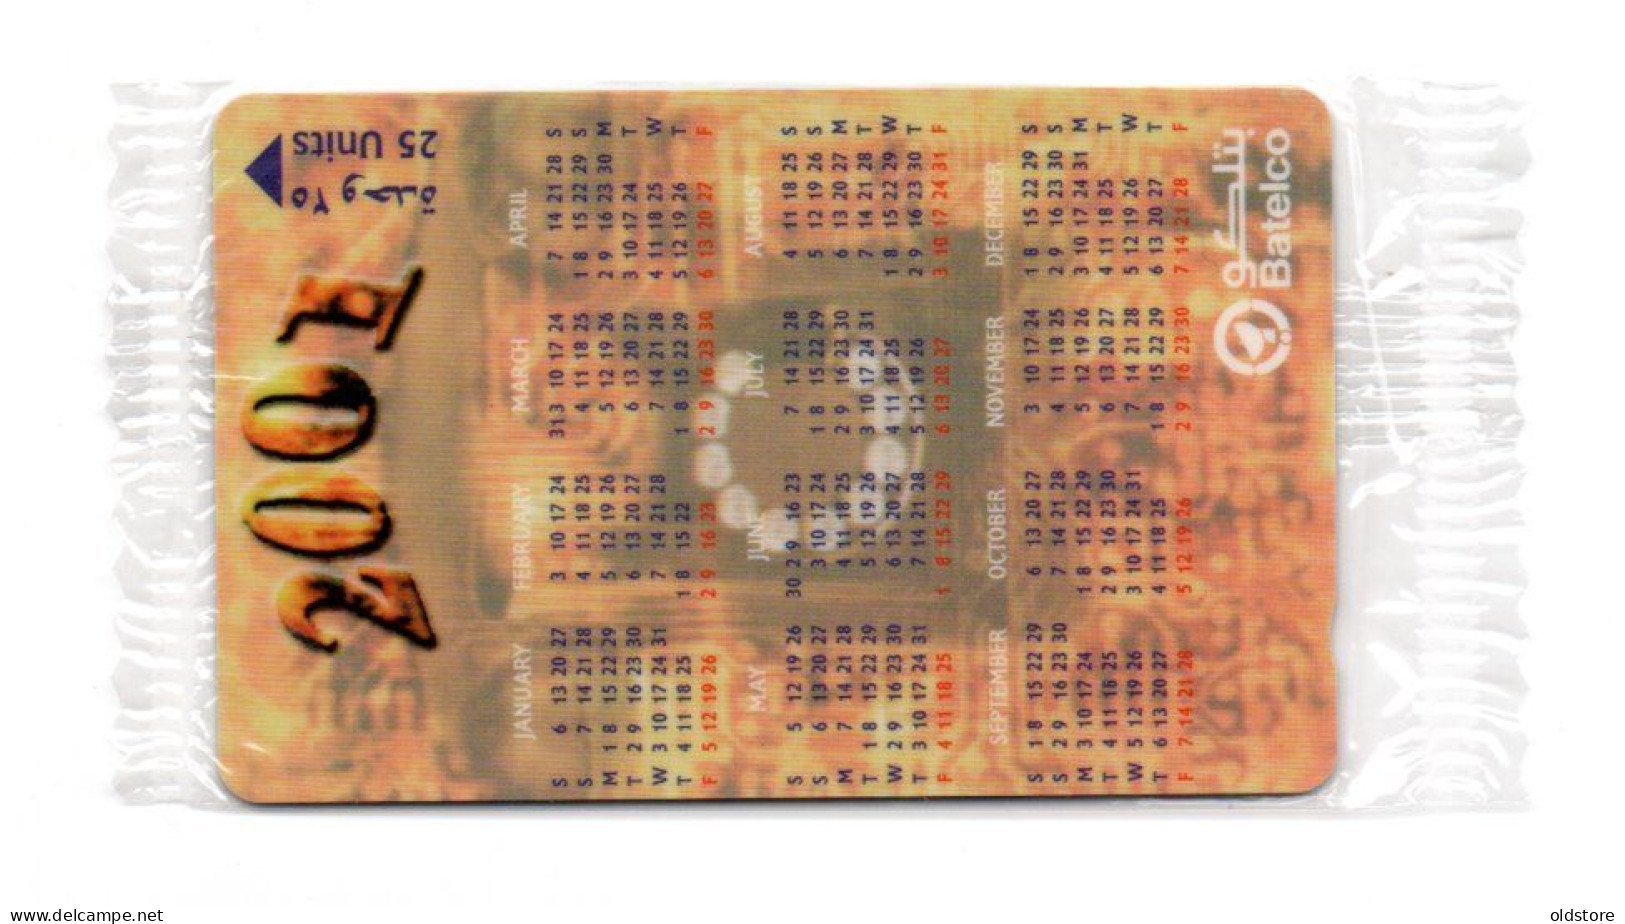 Bahrain Phonecards - 2001 Calendar - Mint Card - Low Serial Number 000080 - ND 2001 - Bahrein